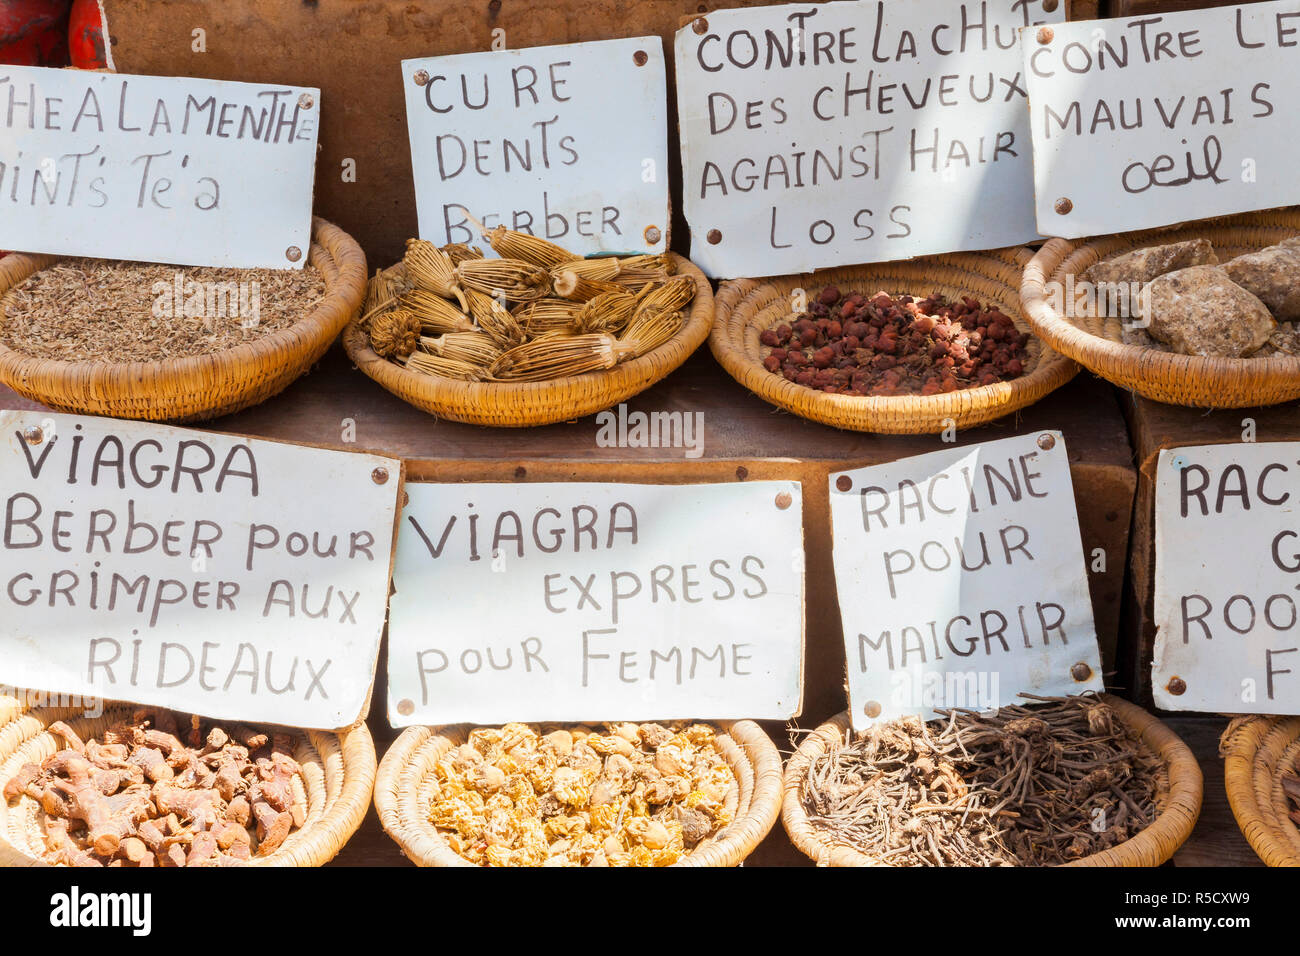 Natural viagra & herbal remedies, Essaouira, Morocco Stock Photo